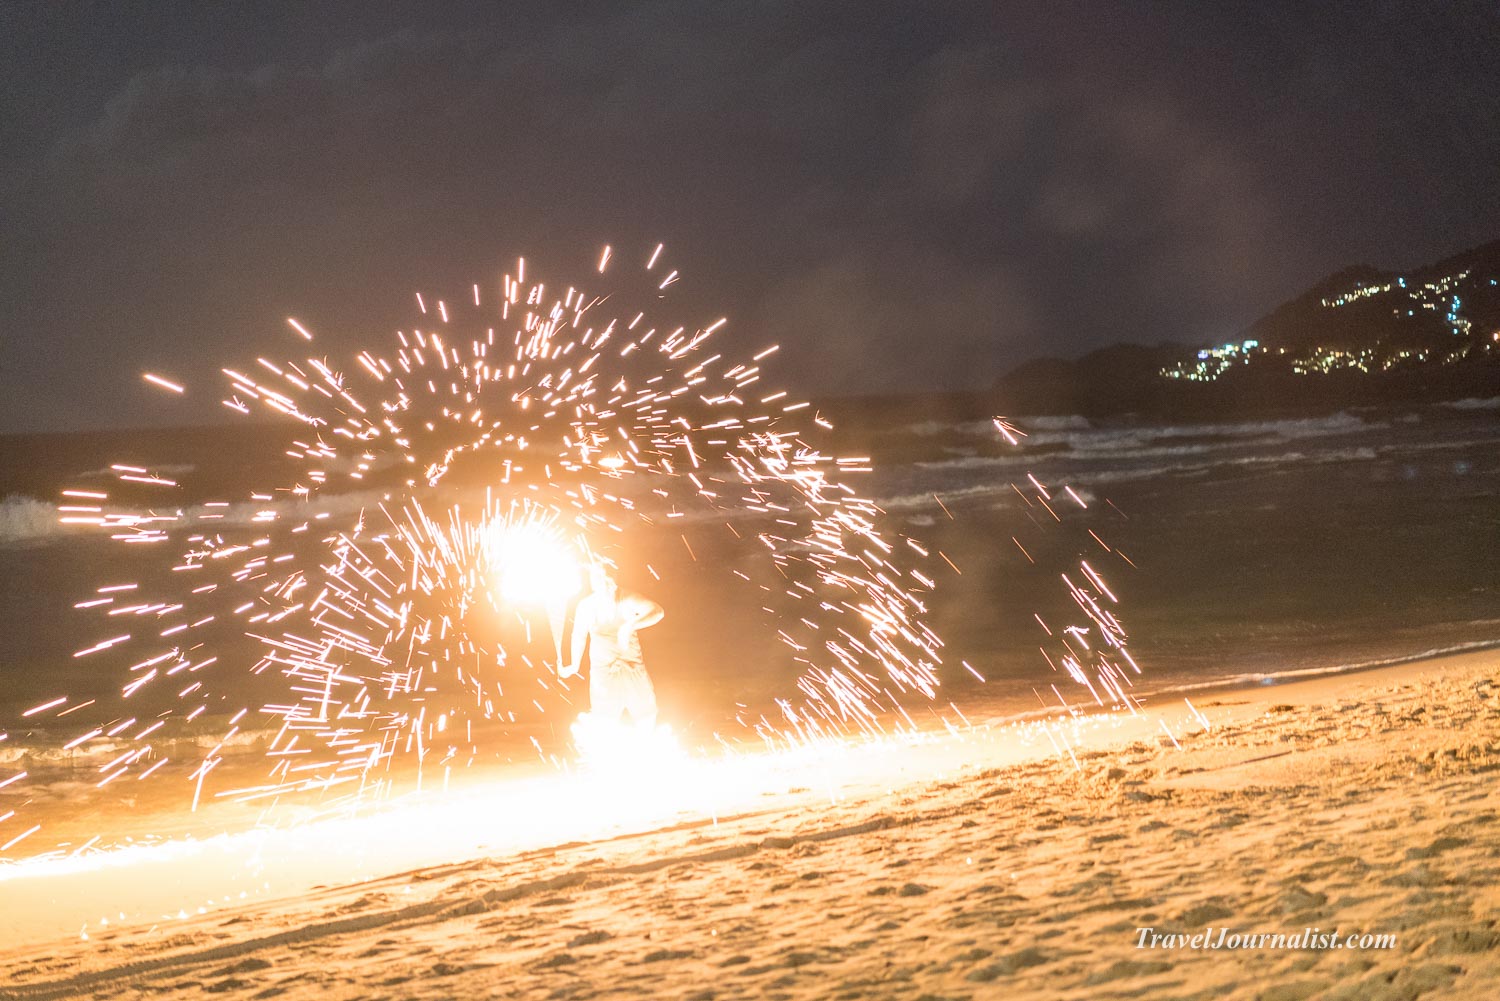 Fire-torch-artist-Juggler-Thailand-Beach-Grand-Centara-Koh-Samui-2